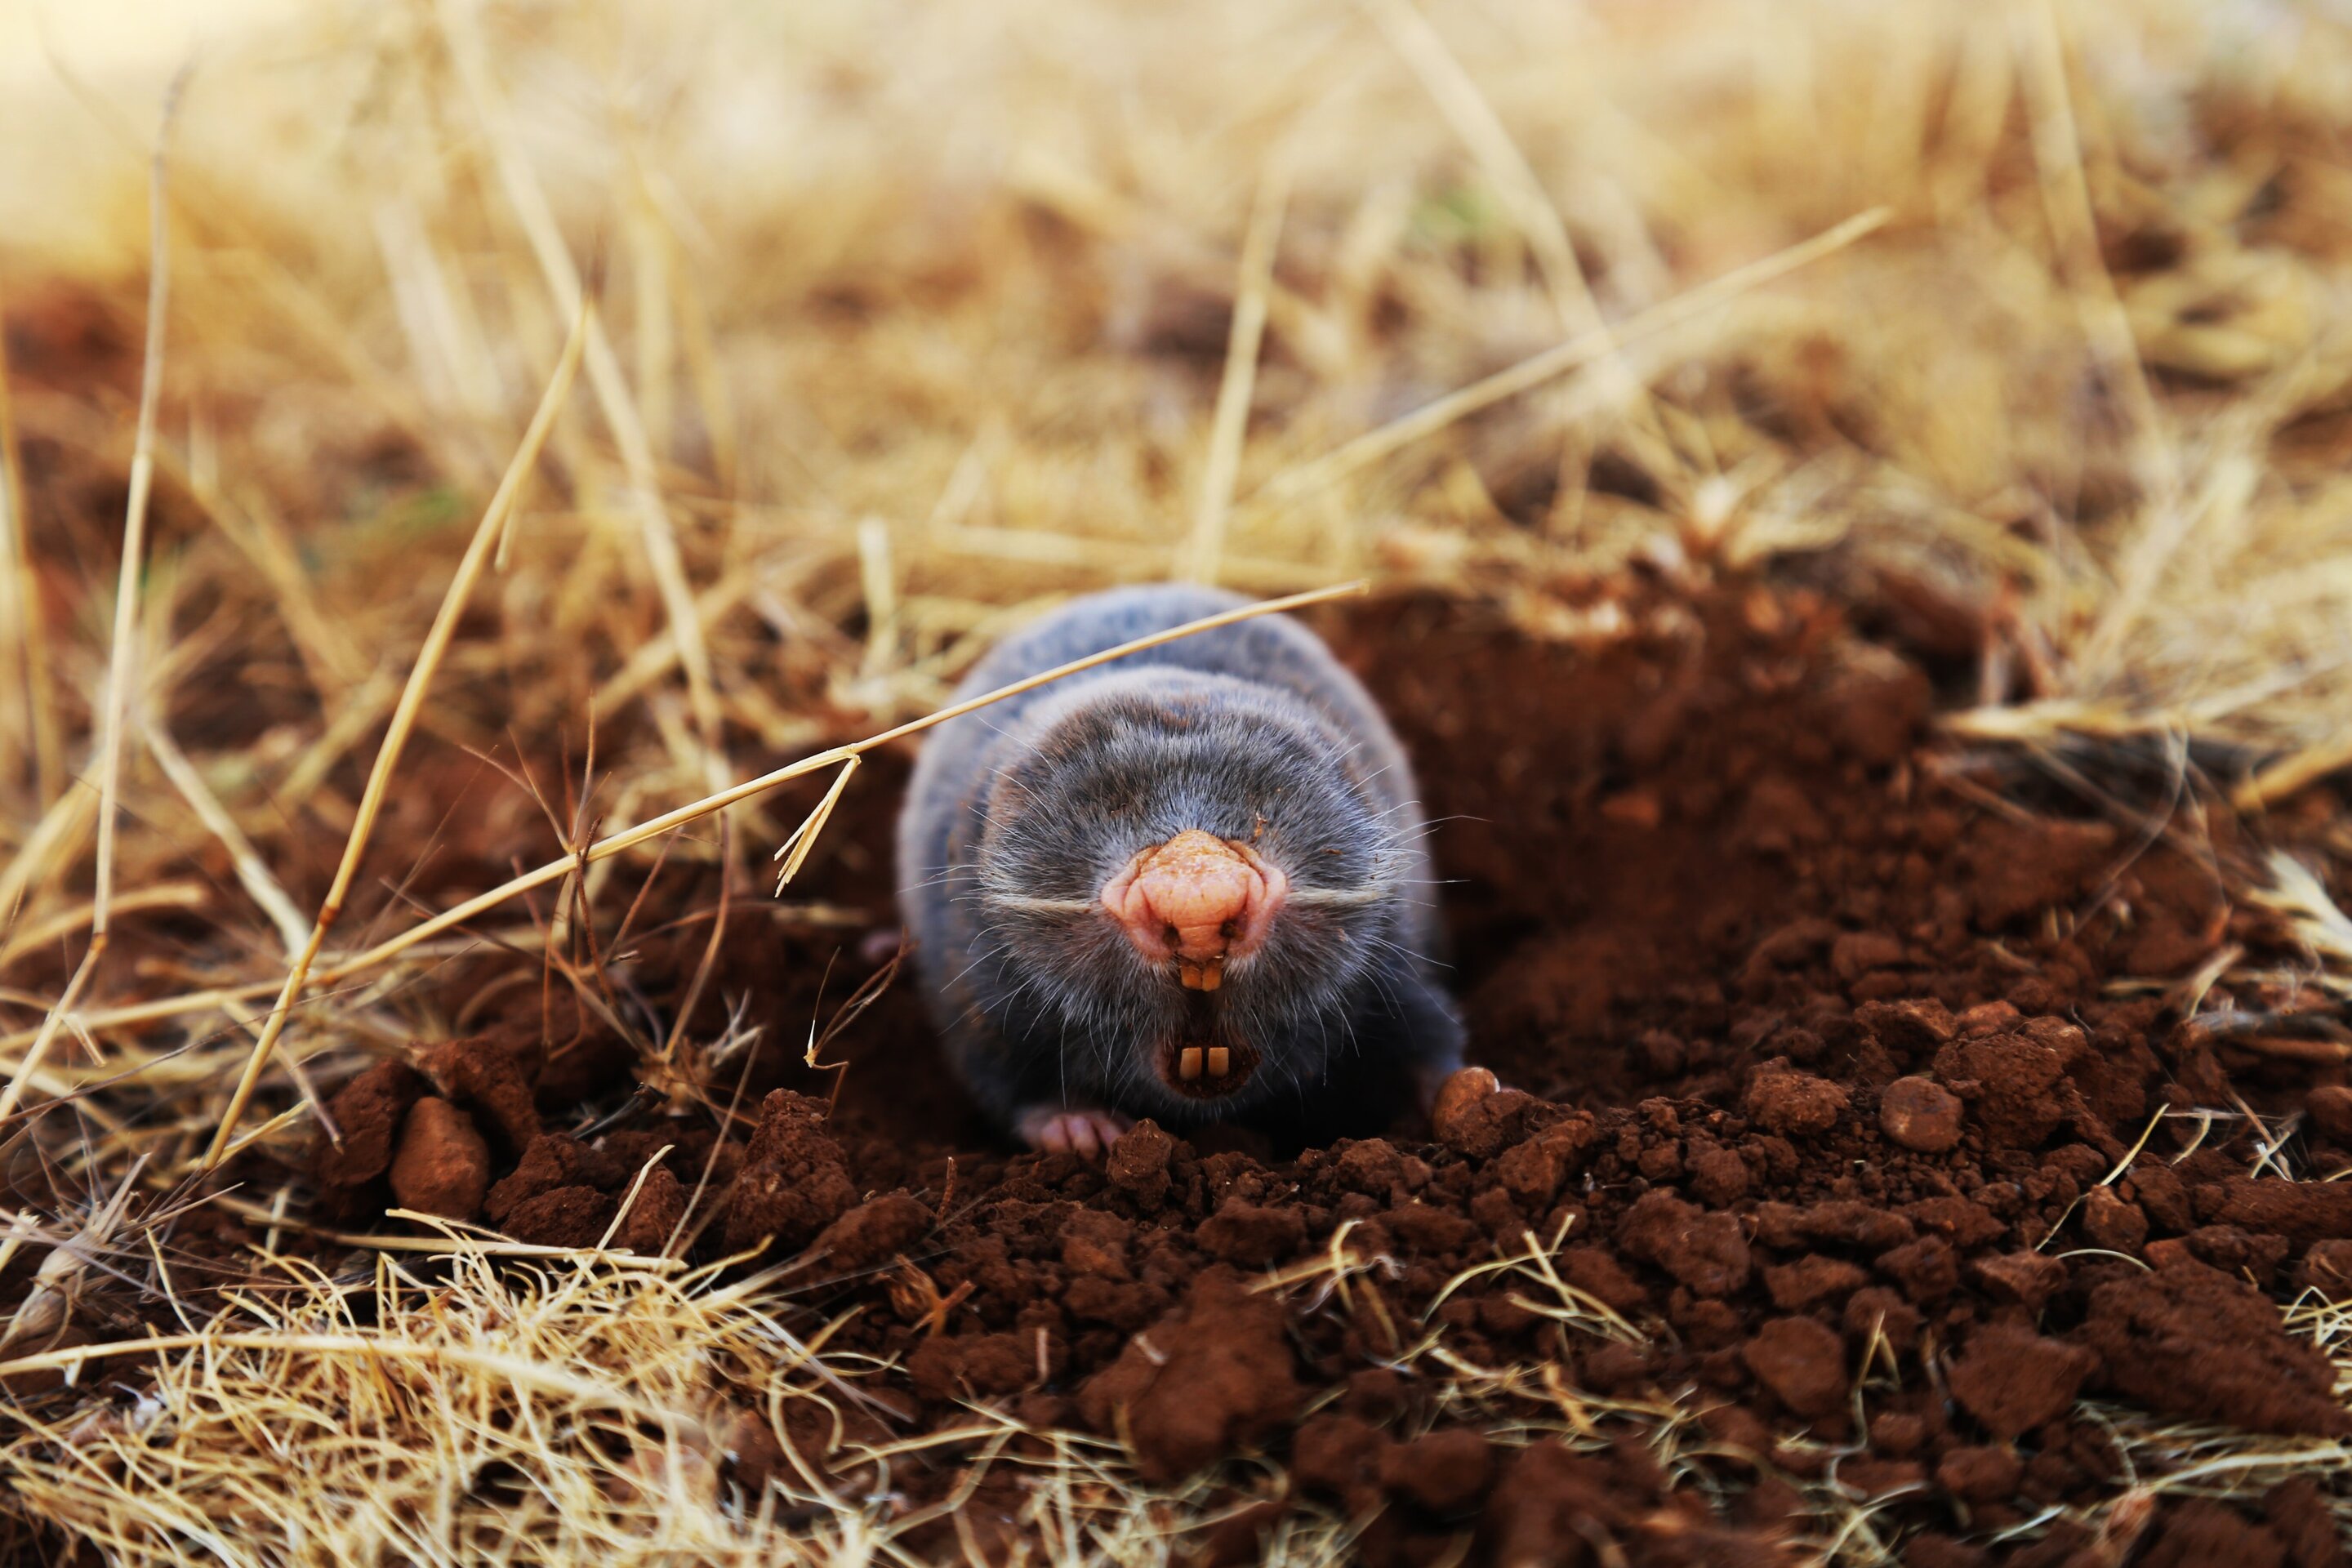 Blind mole rats live longer due to short immune memory, study finds